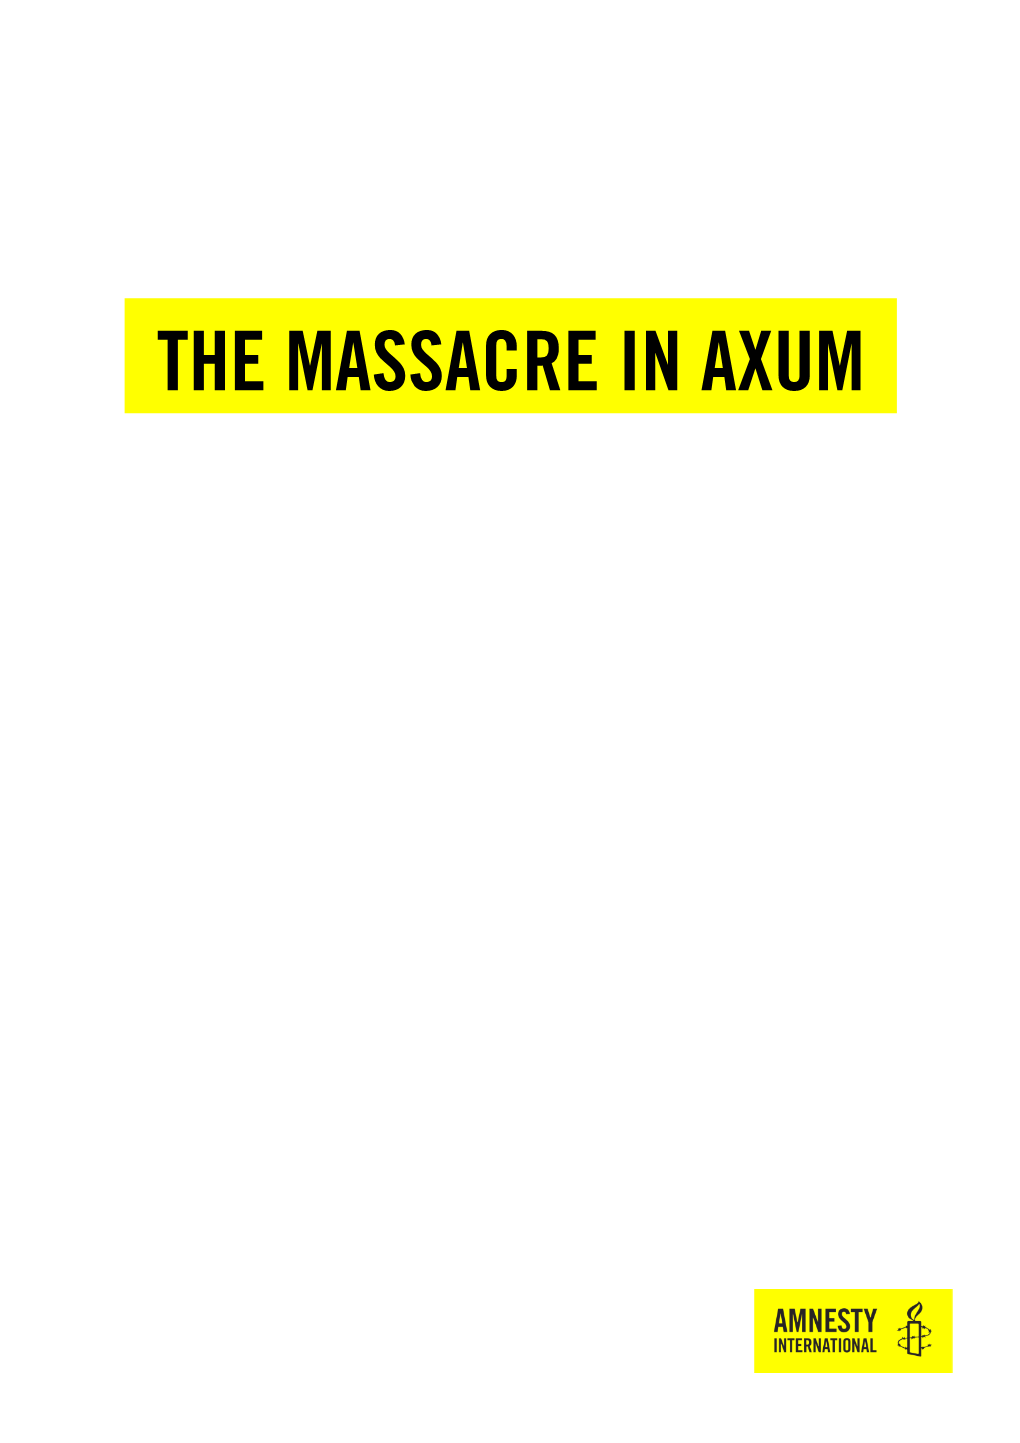 The Massacre of Axum